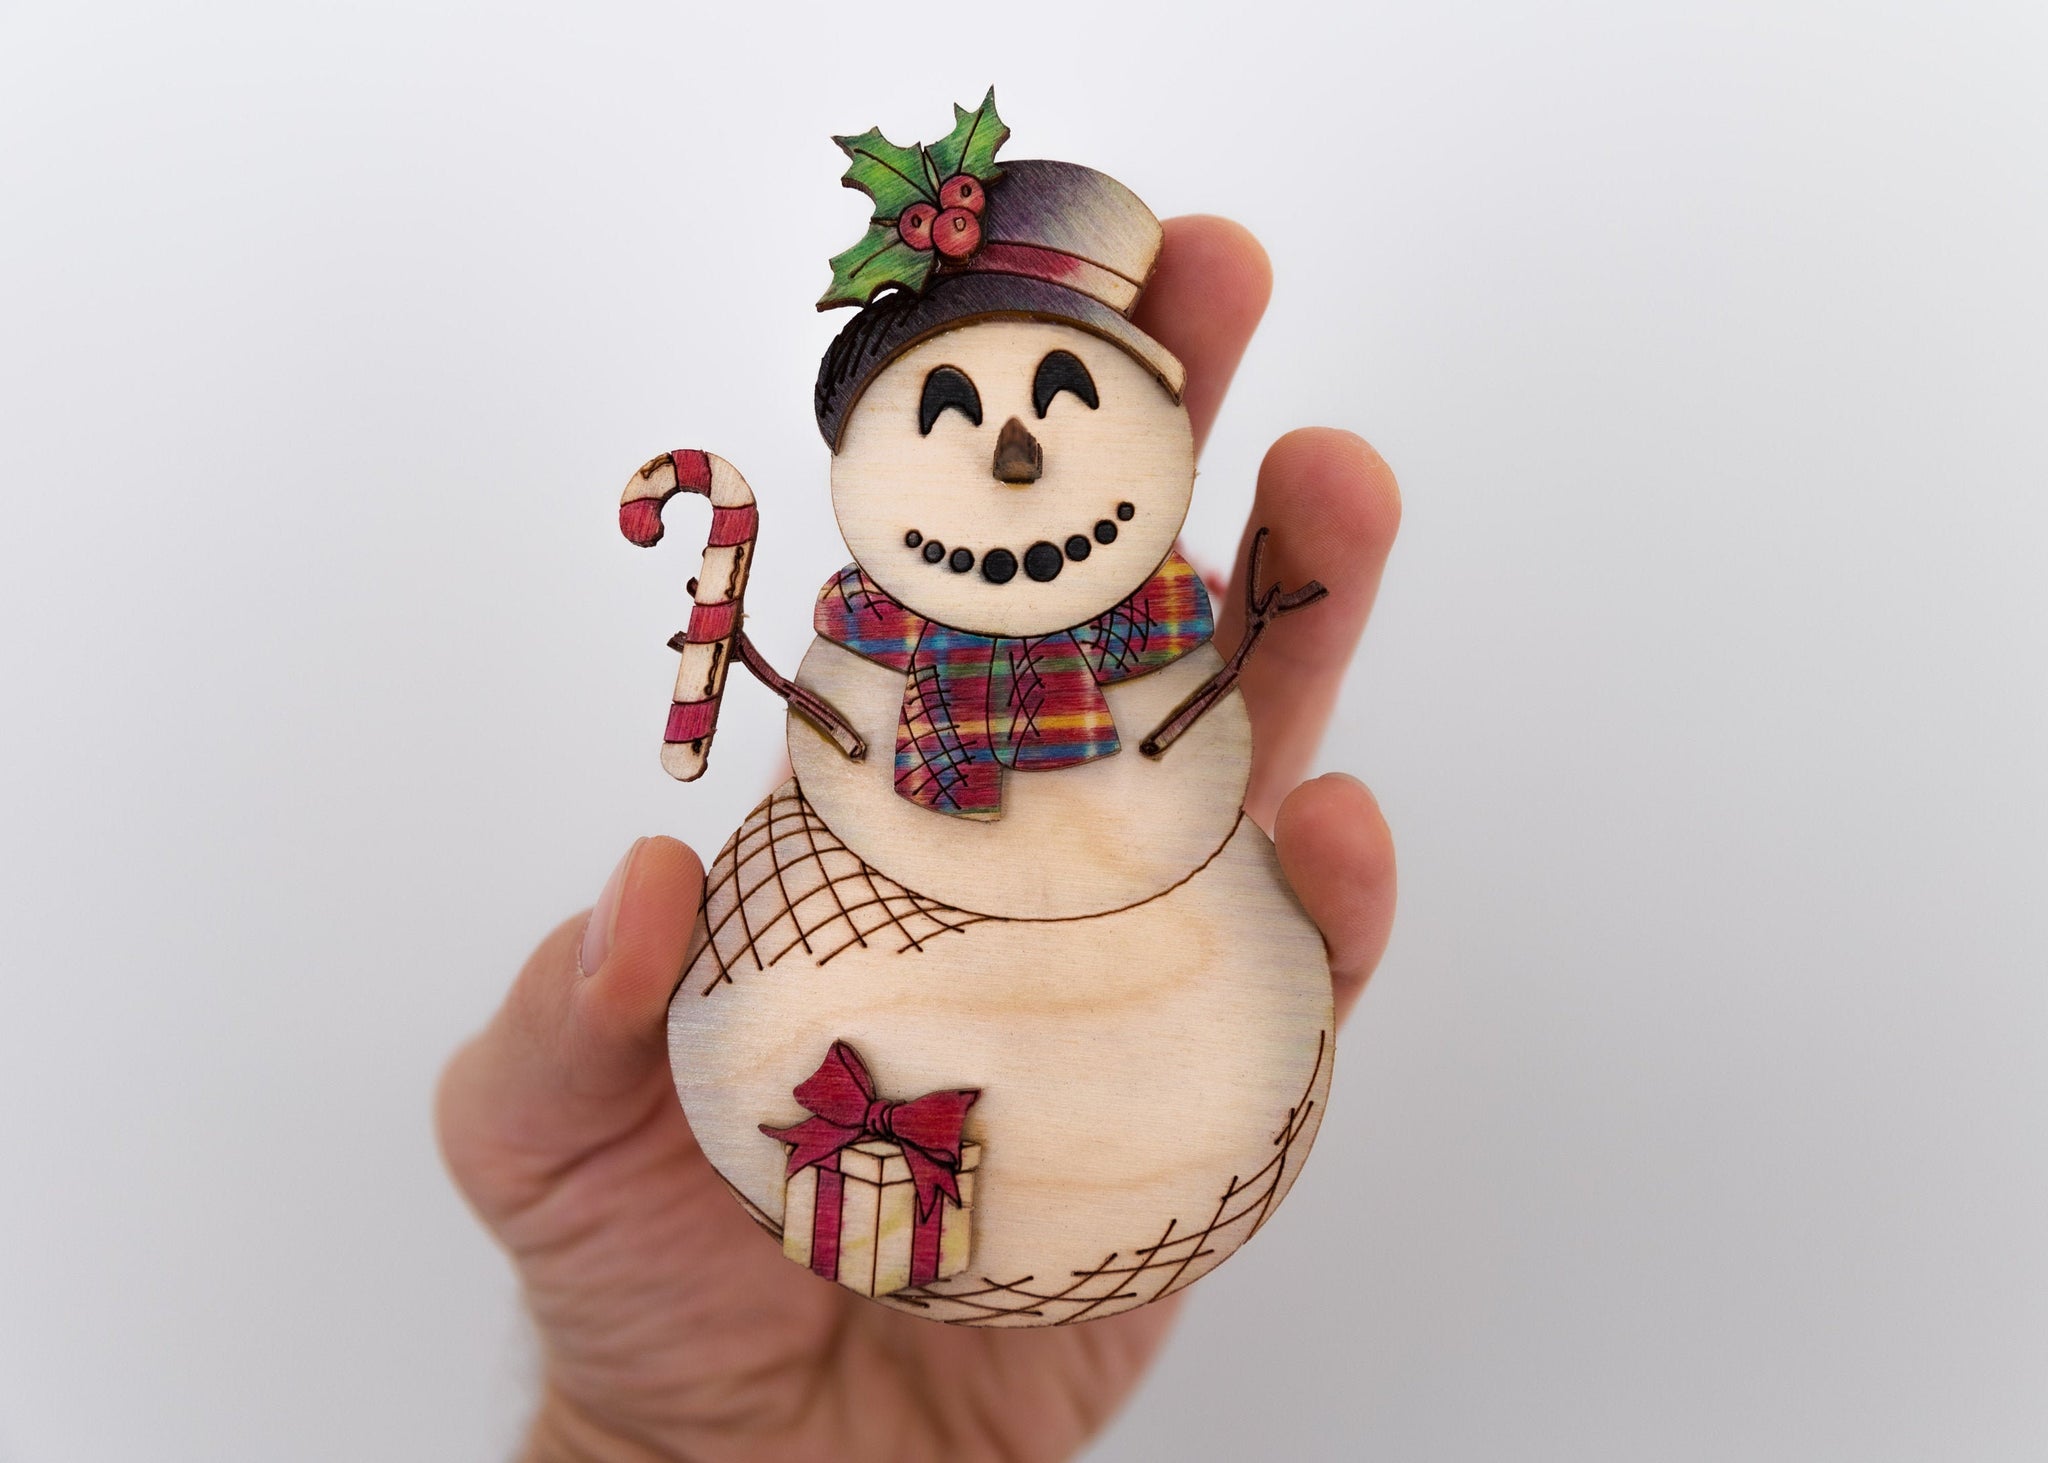 DIY Christmas Ornament Kits, Gingerbread Man & Snowman – One Man